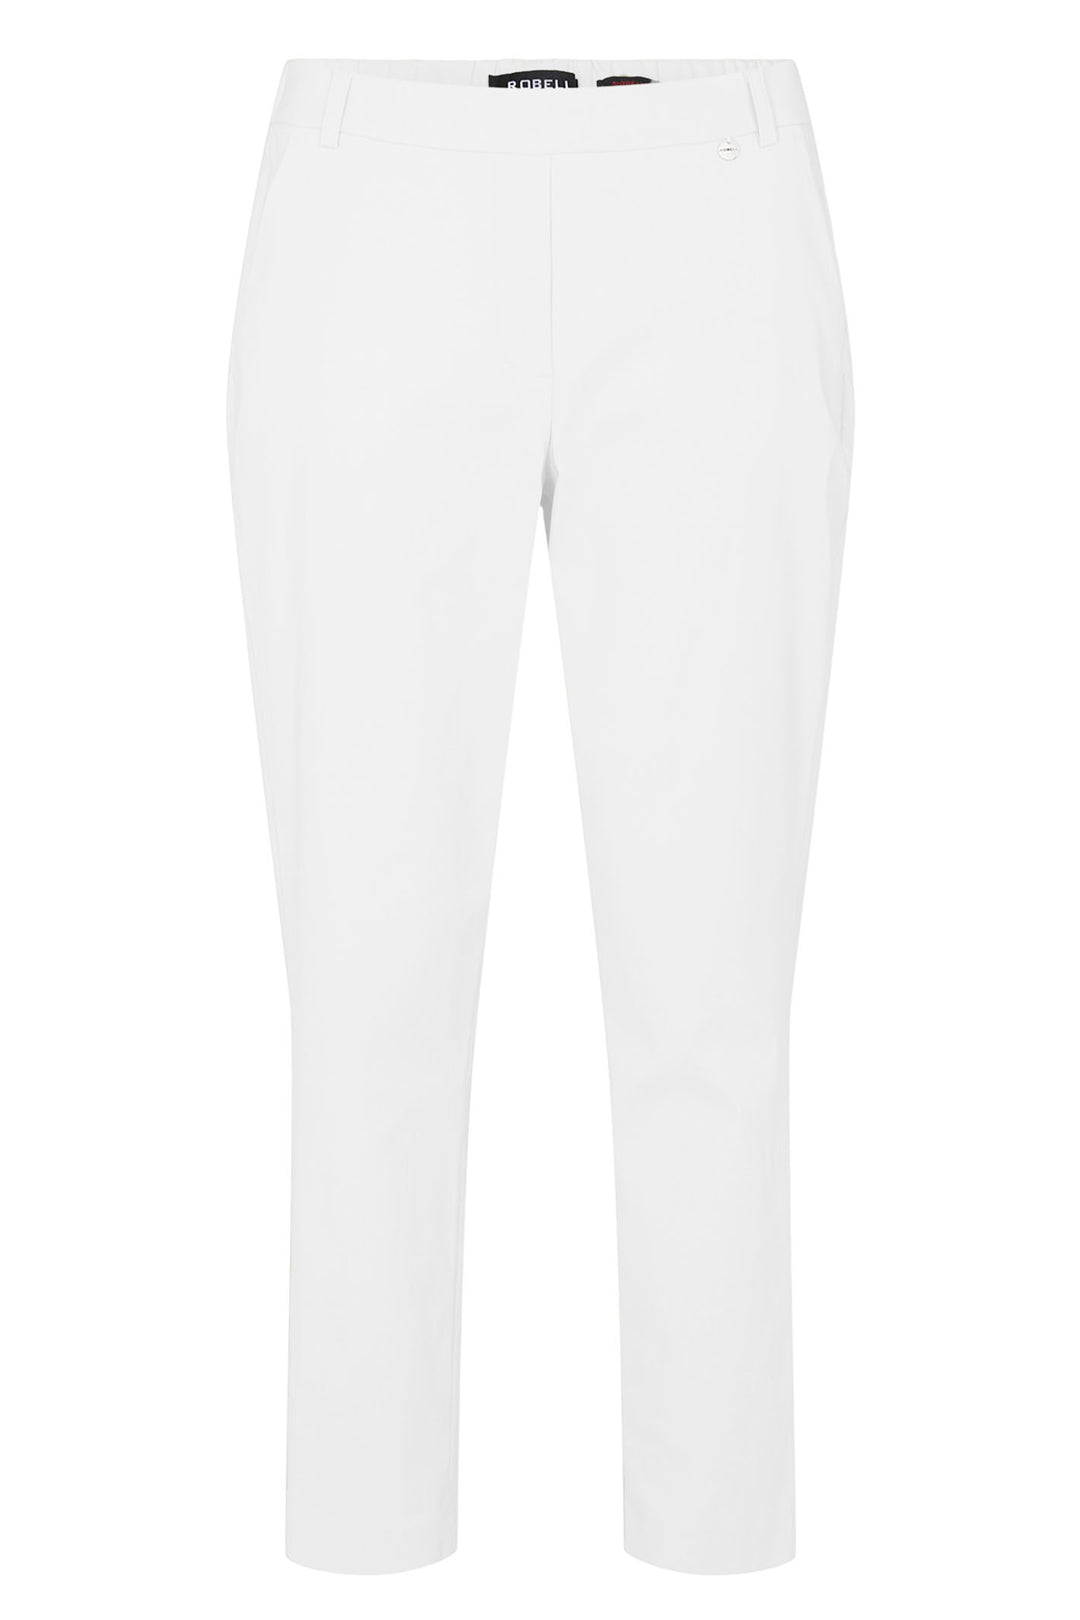 Robell 51409-05499-10 Sophia White Pull-On 68cm Trousers - Olivia Grace Fashion